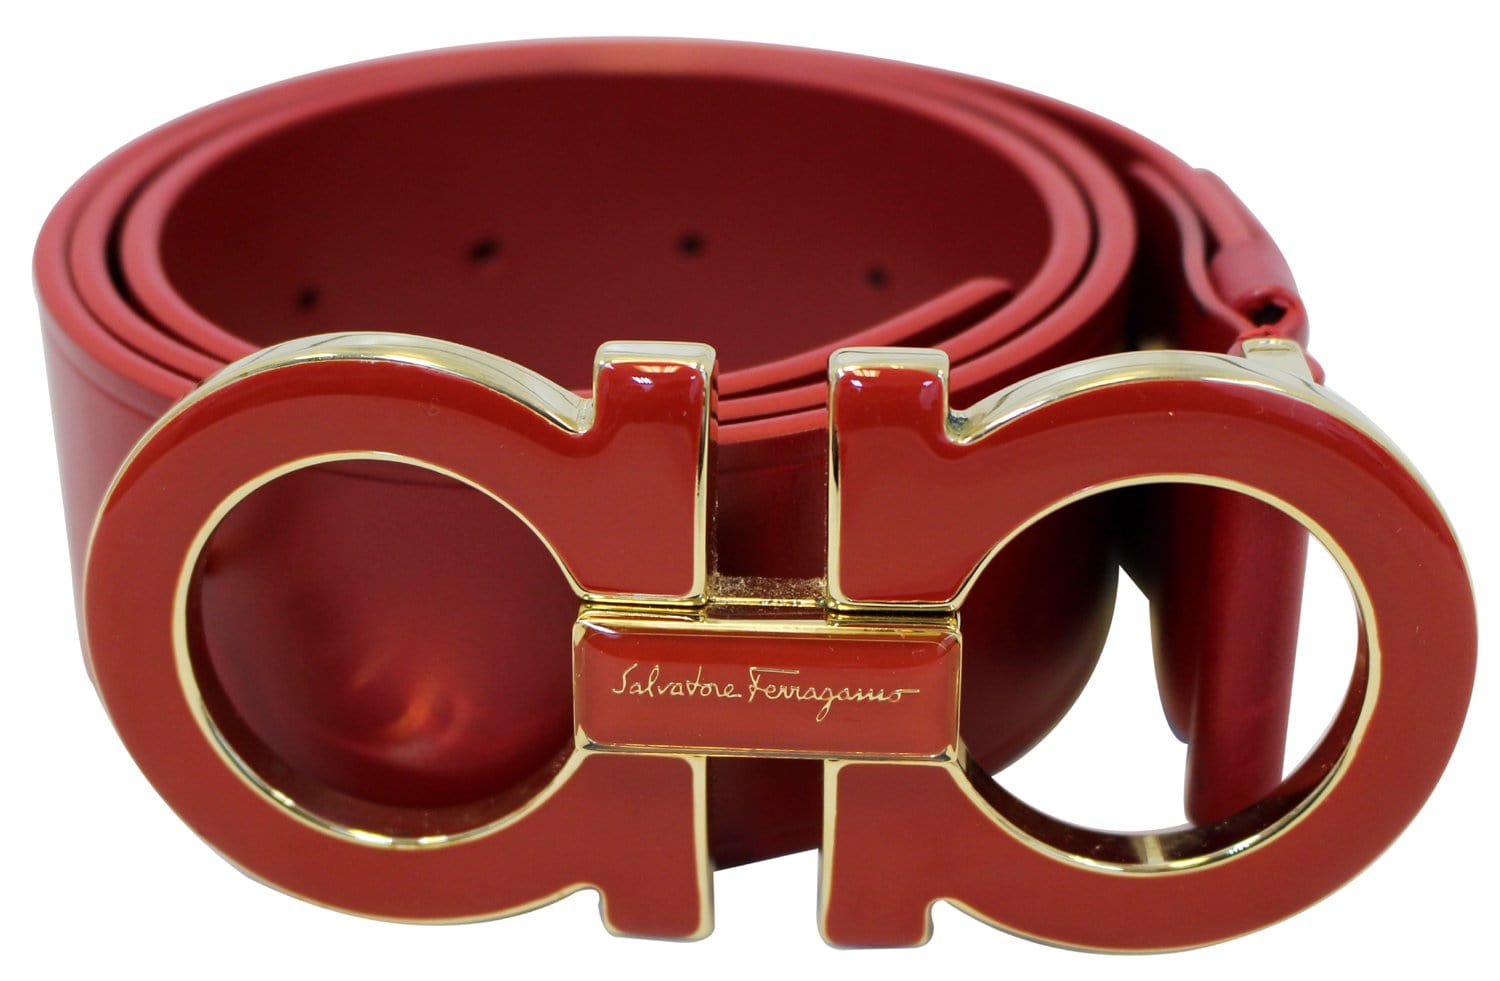 Salvatore Ferragamo Men's Large Enamel Gancini Buckle Belt, Red